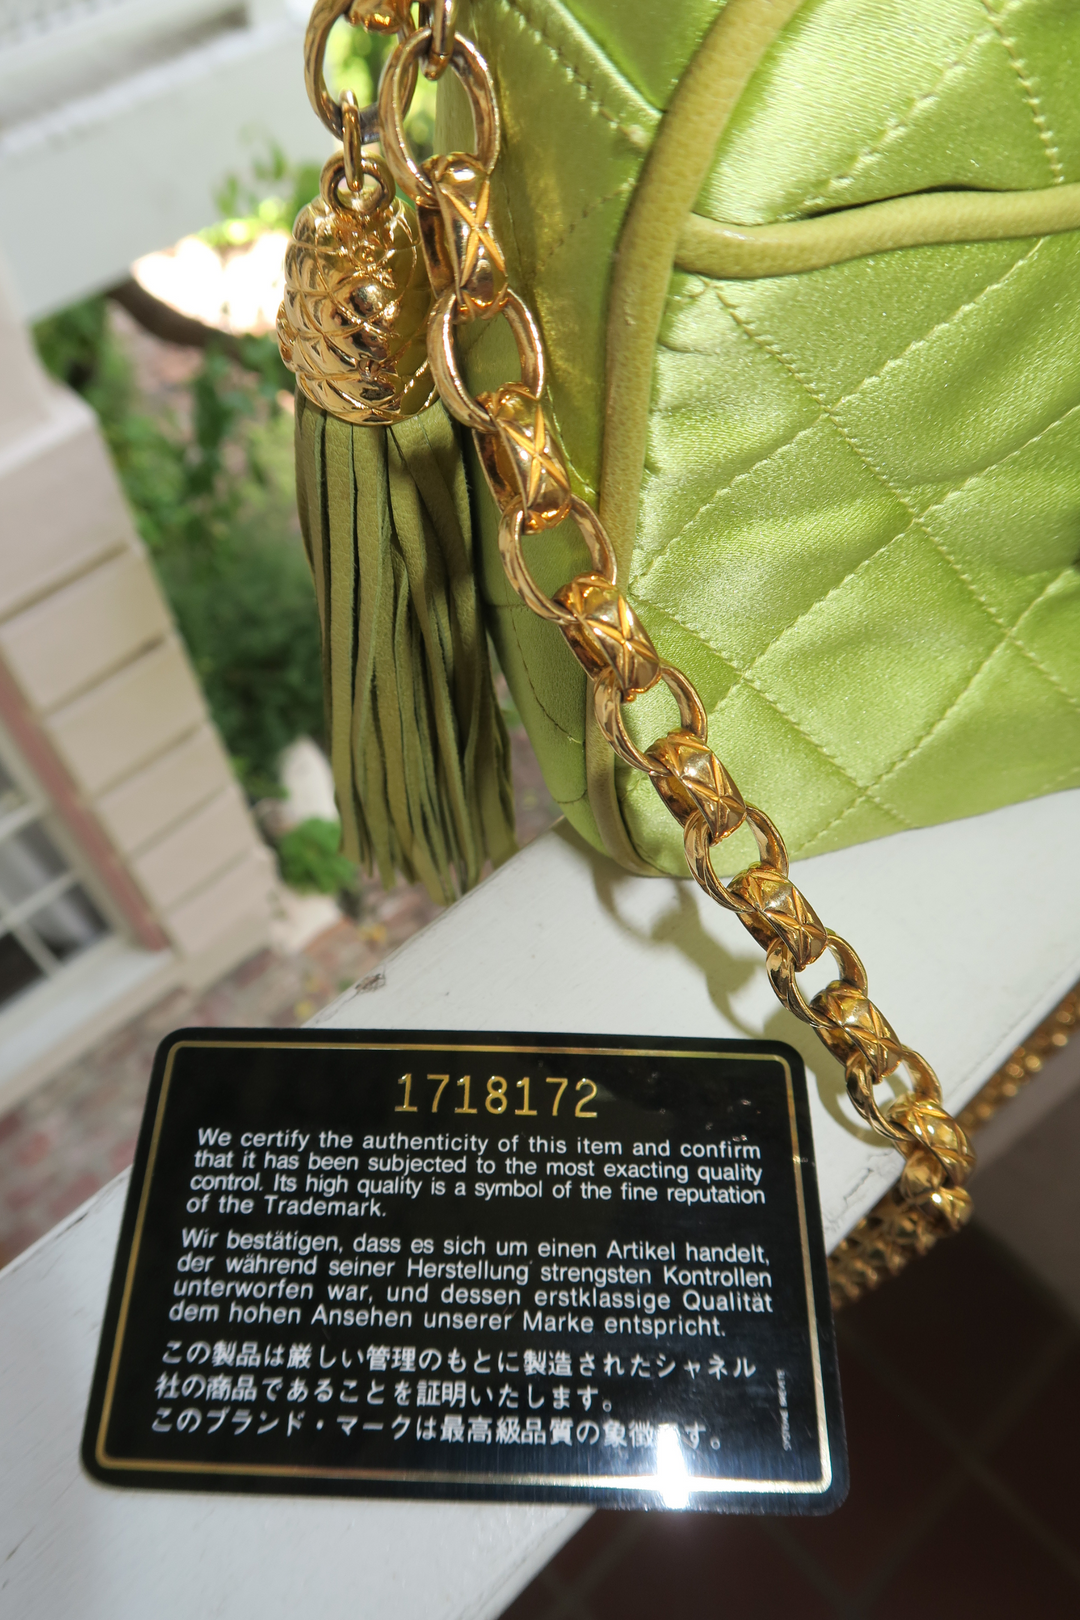 Chanel Silk Diana Camera Bag